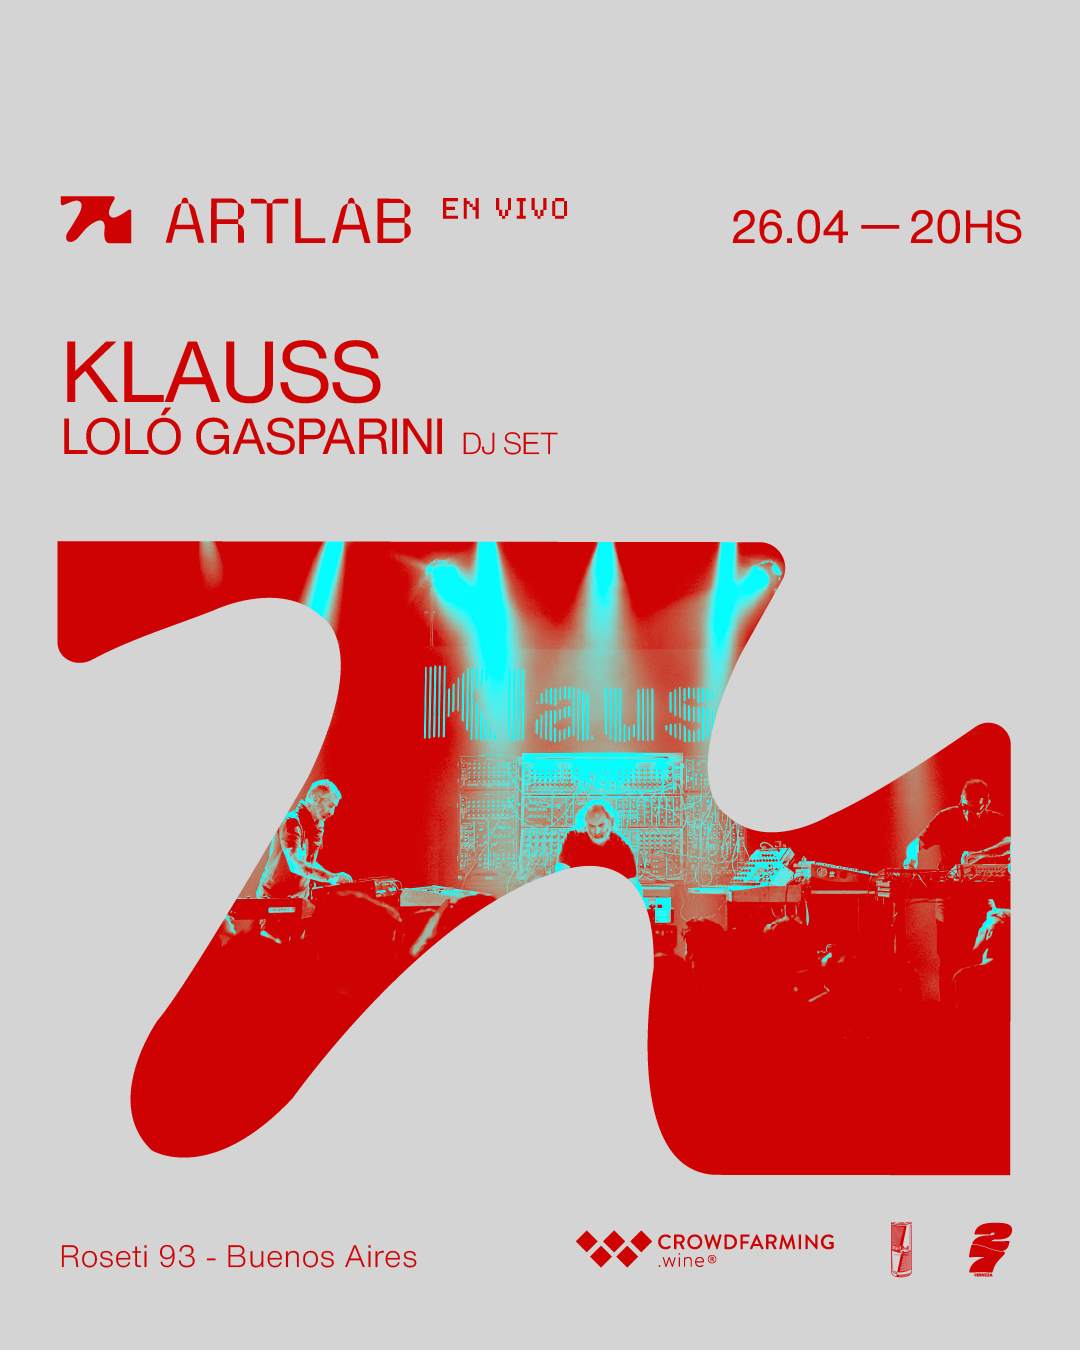 Artlab en Vivo! - Klauss (live) + Loló Gasparini (Dj) - フライヤー表